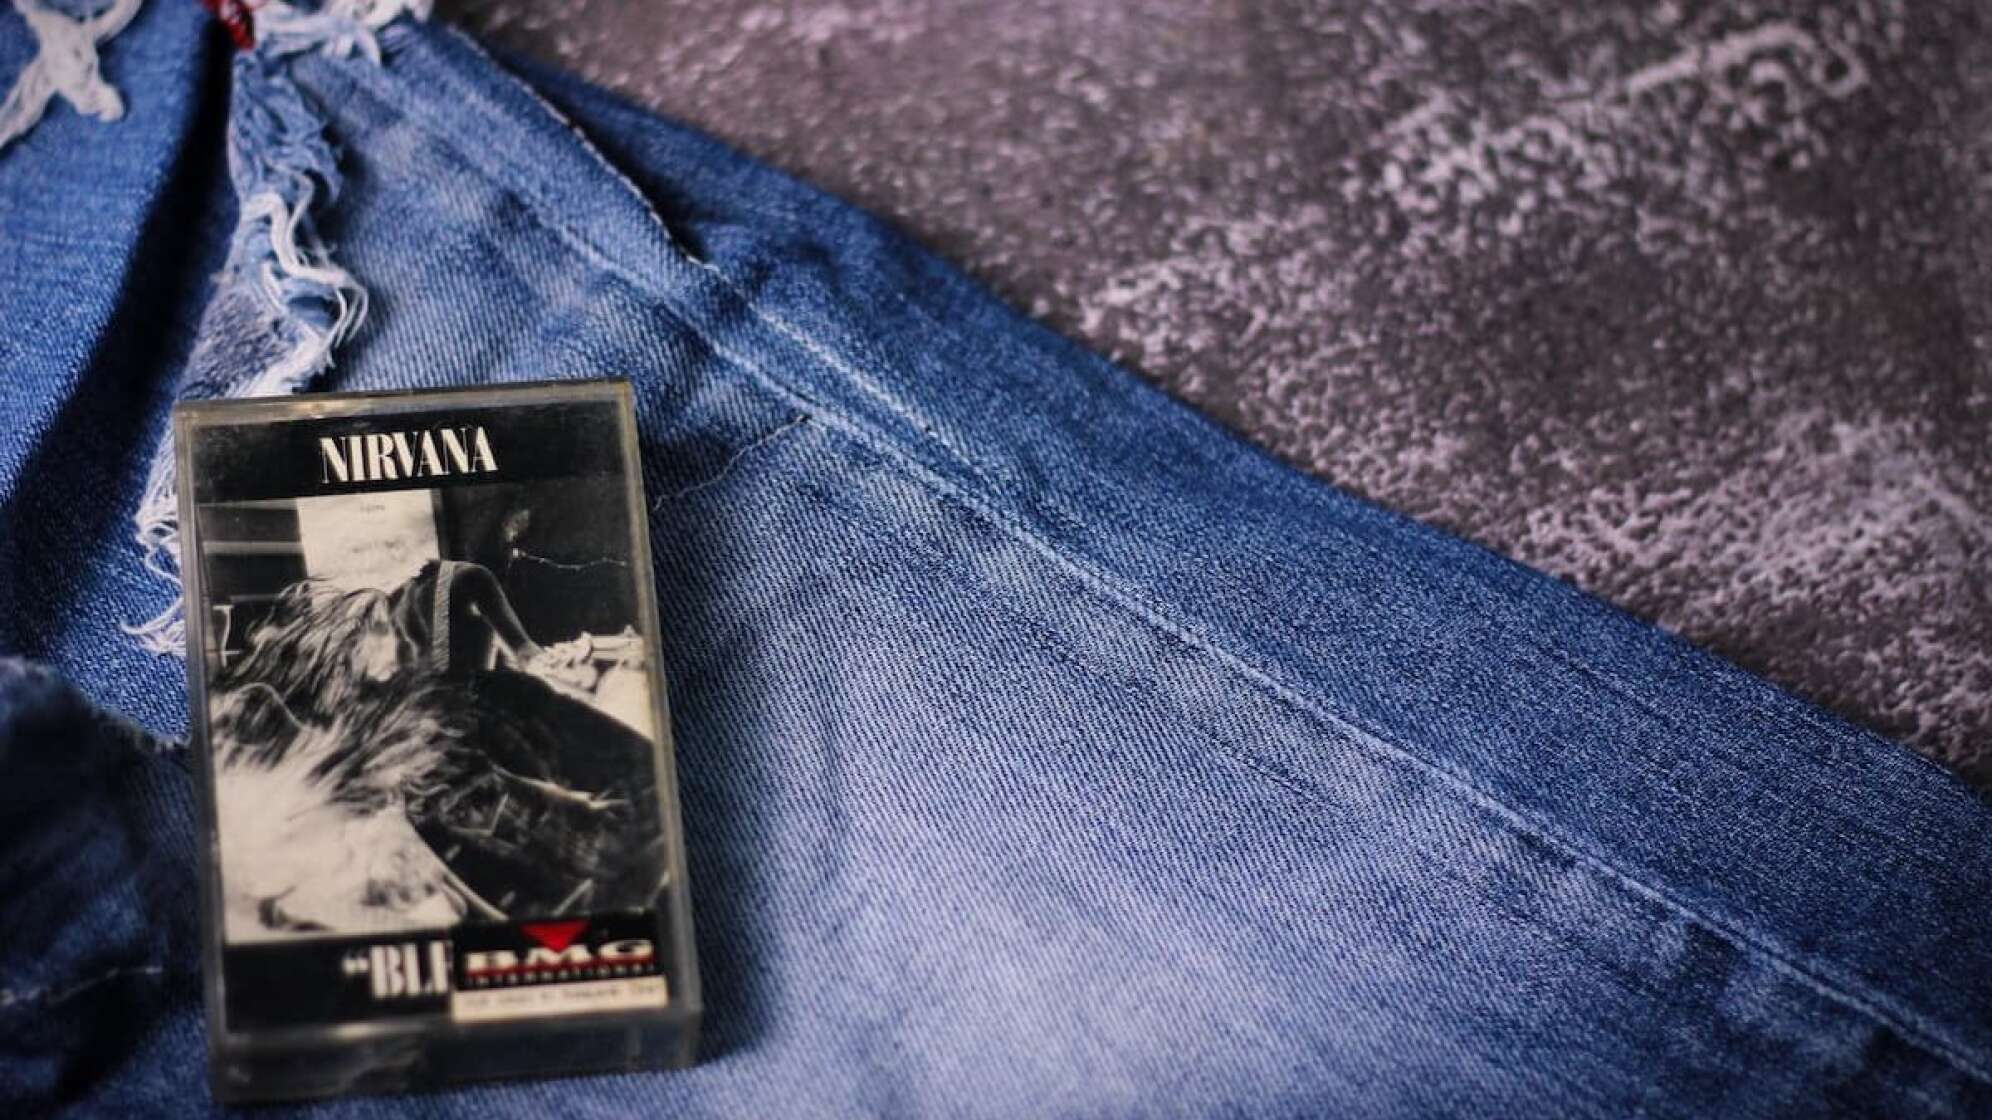 Zerrissene Jeans mit Nirvana Kassette